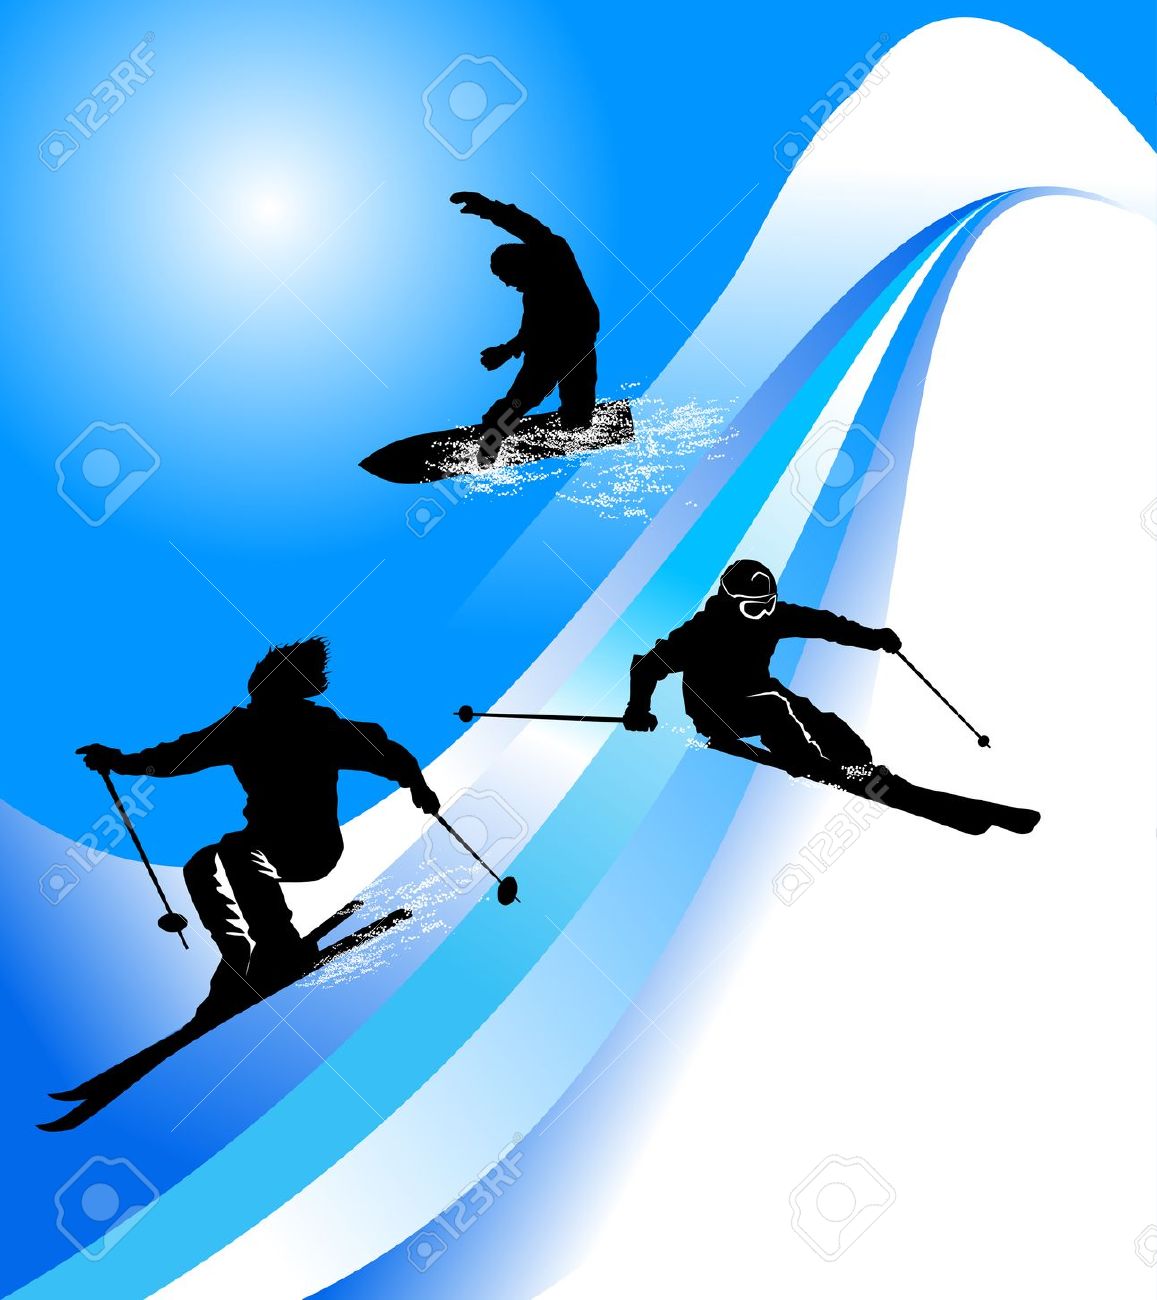 Free Ski Slope Cliparts, Download Free Ski Slope Cliparts png images